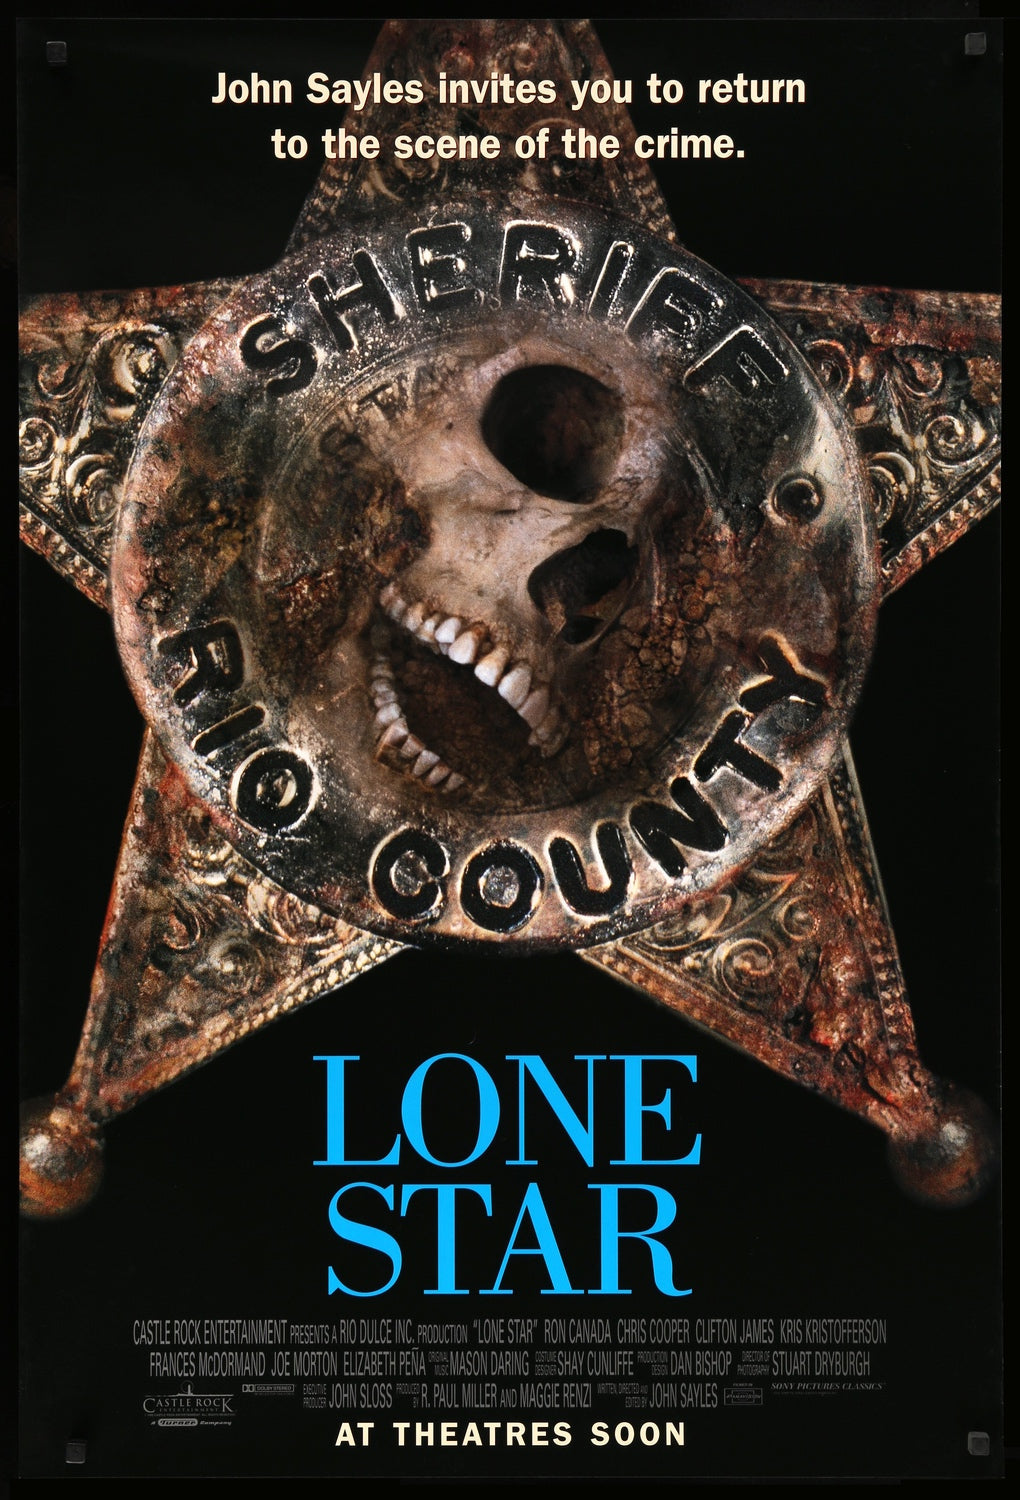 Lone Star (1996) original movie poster for sale at Original Film Art